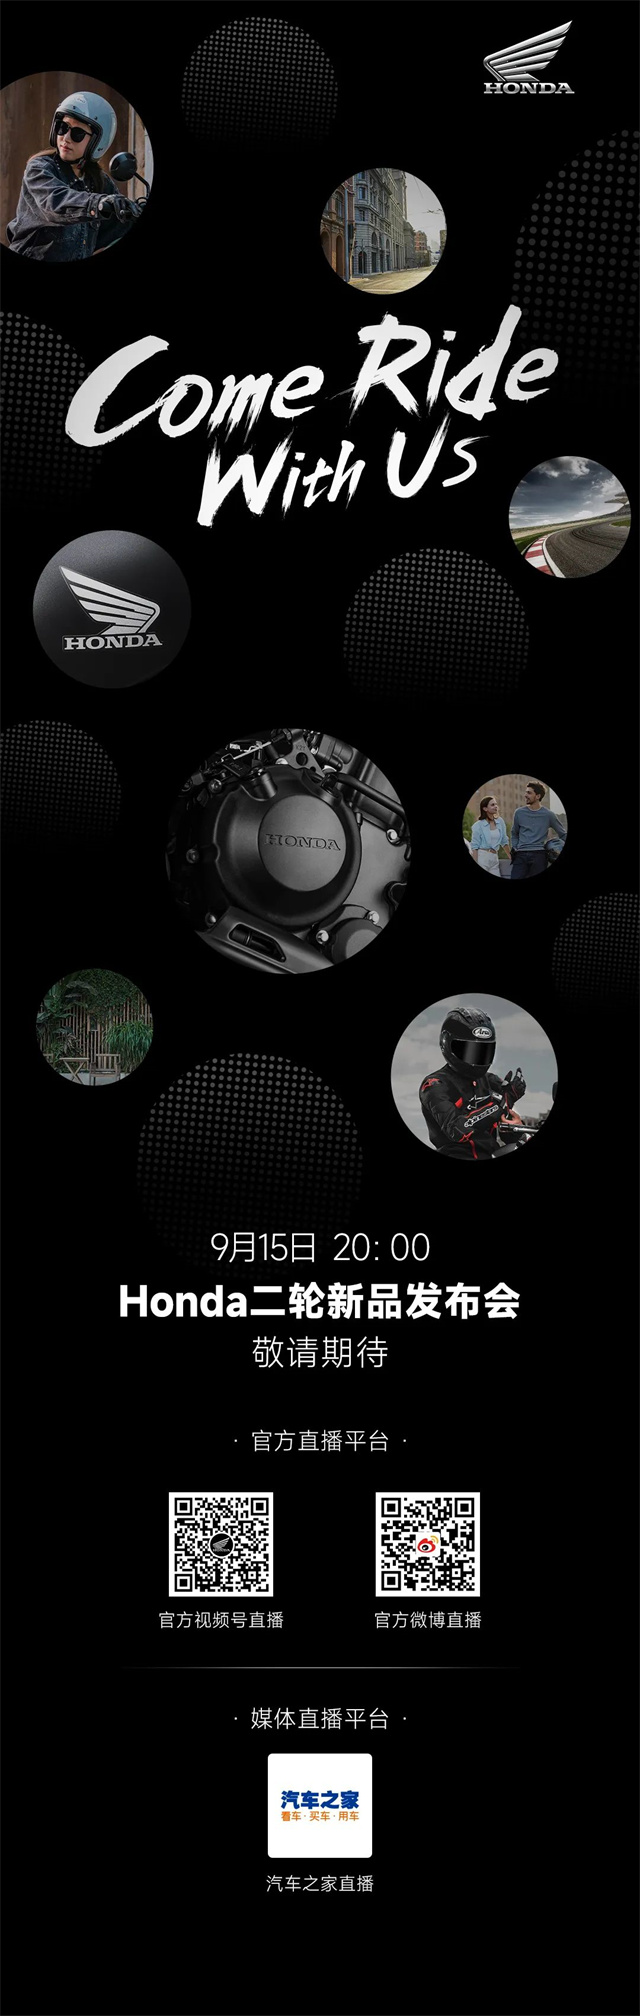 Honda二輪新品發布會敬請期待